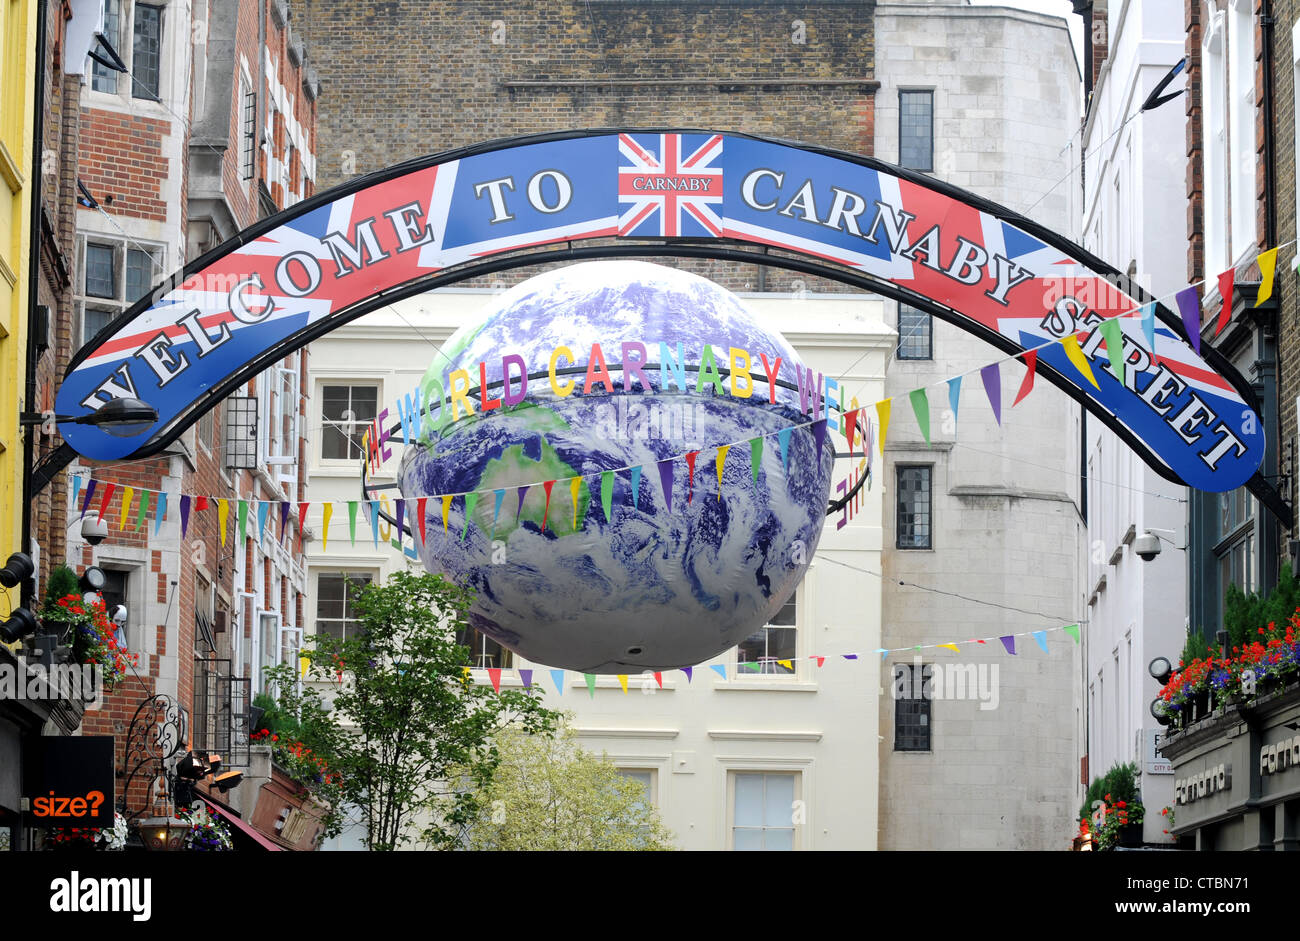 'Carnaby Street” sign, Soho, London, Britain, UK Stock Photo